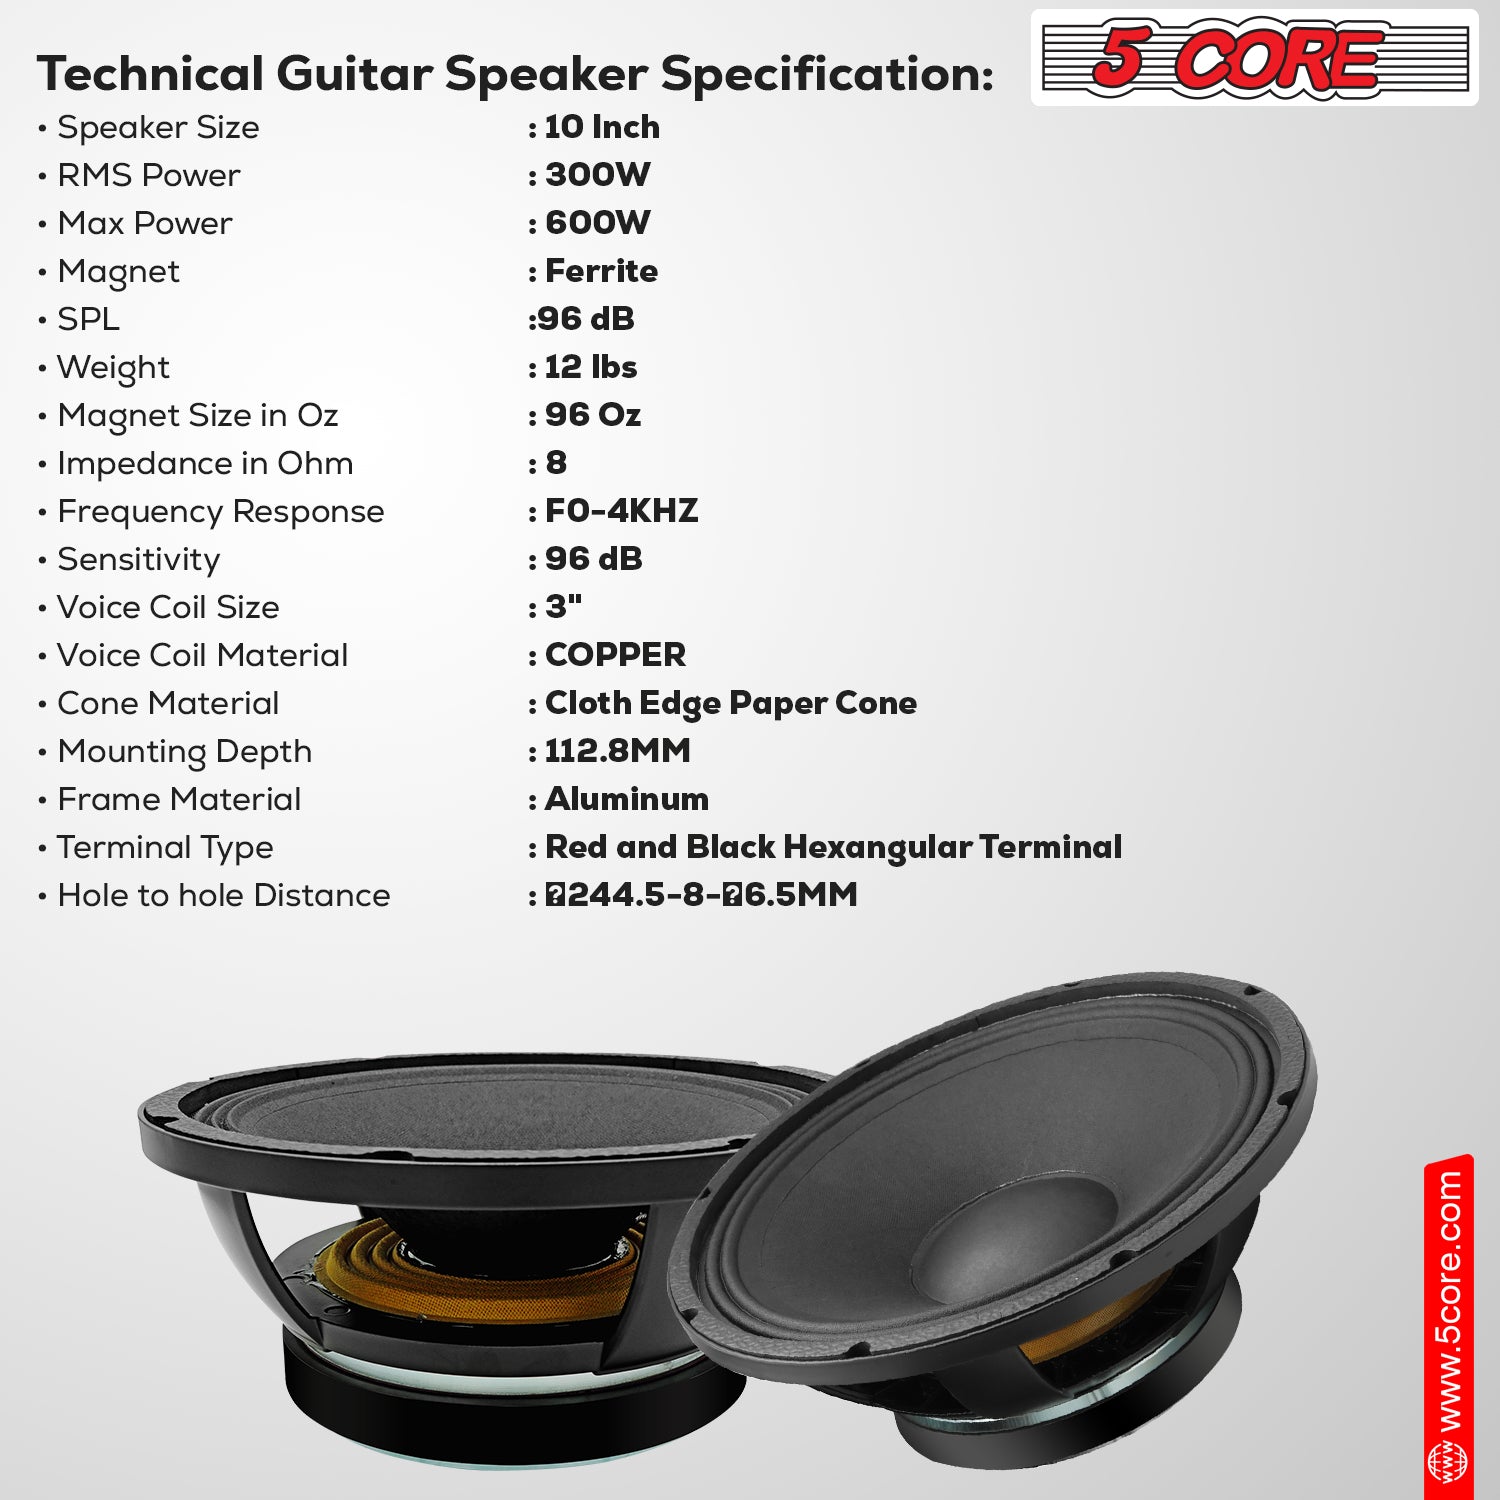 600W Peak Power Guitar Speaker Replacement by 5 Core